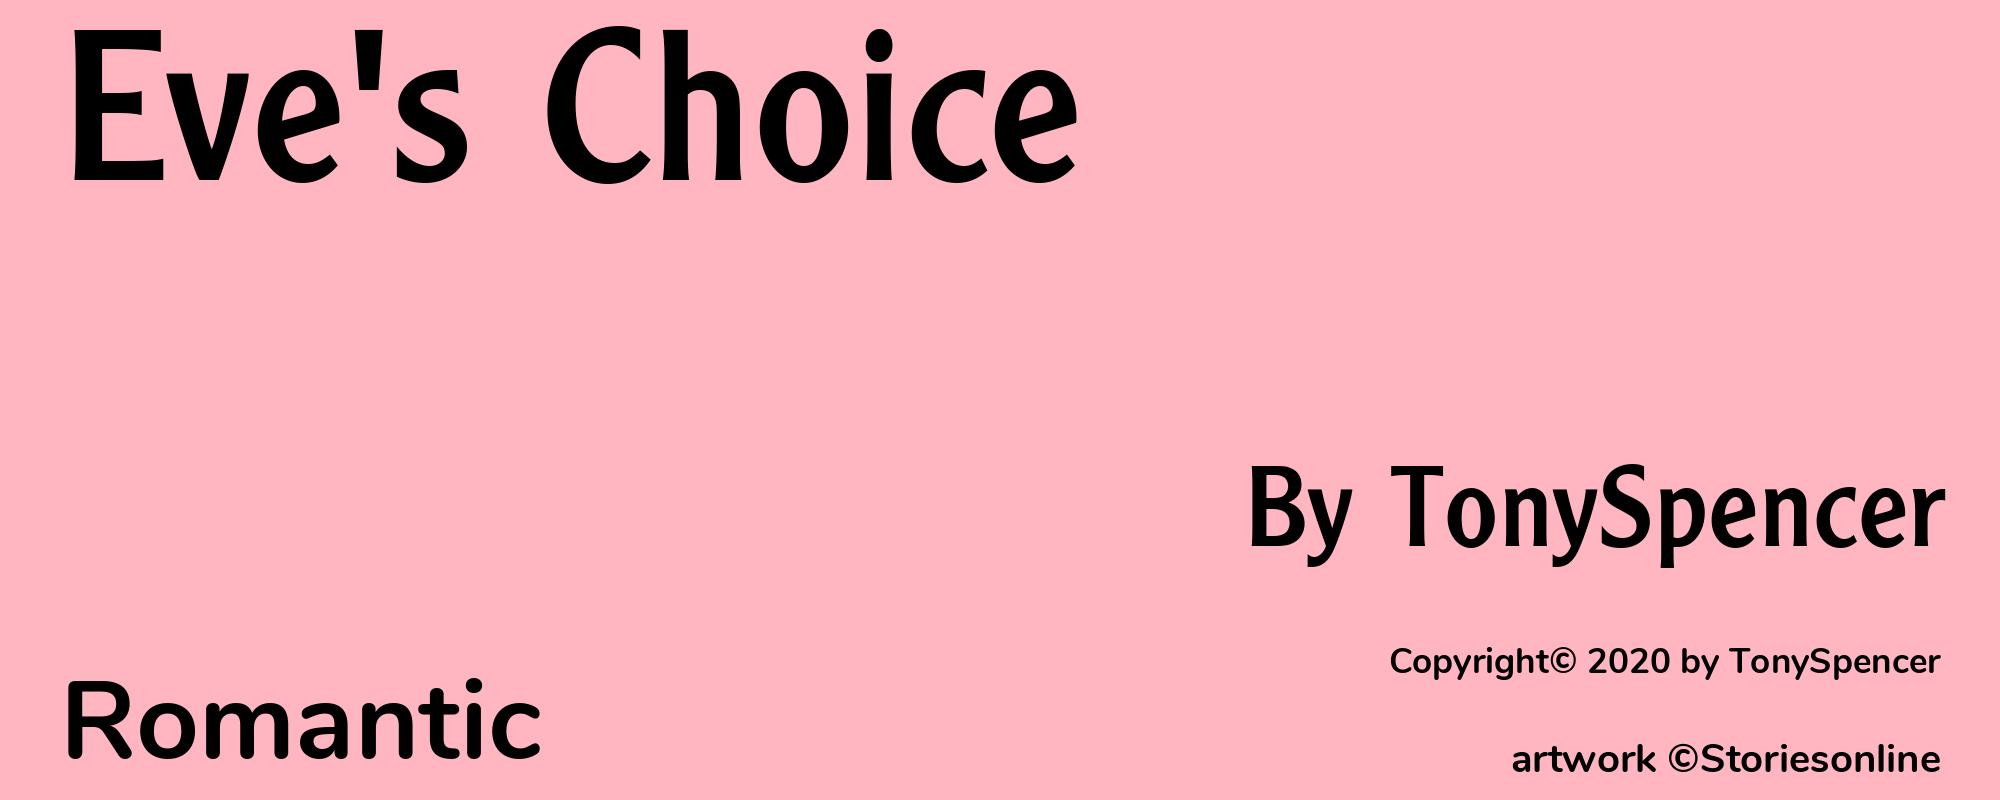 Eve's Choice - Cover